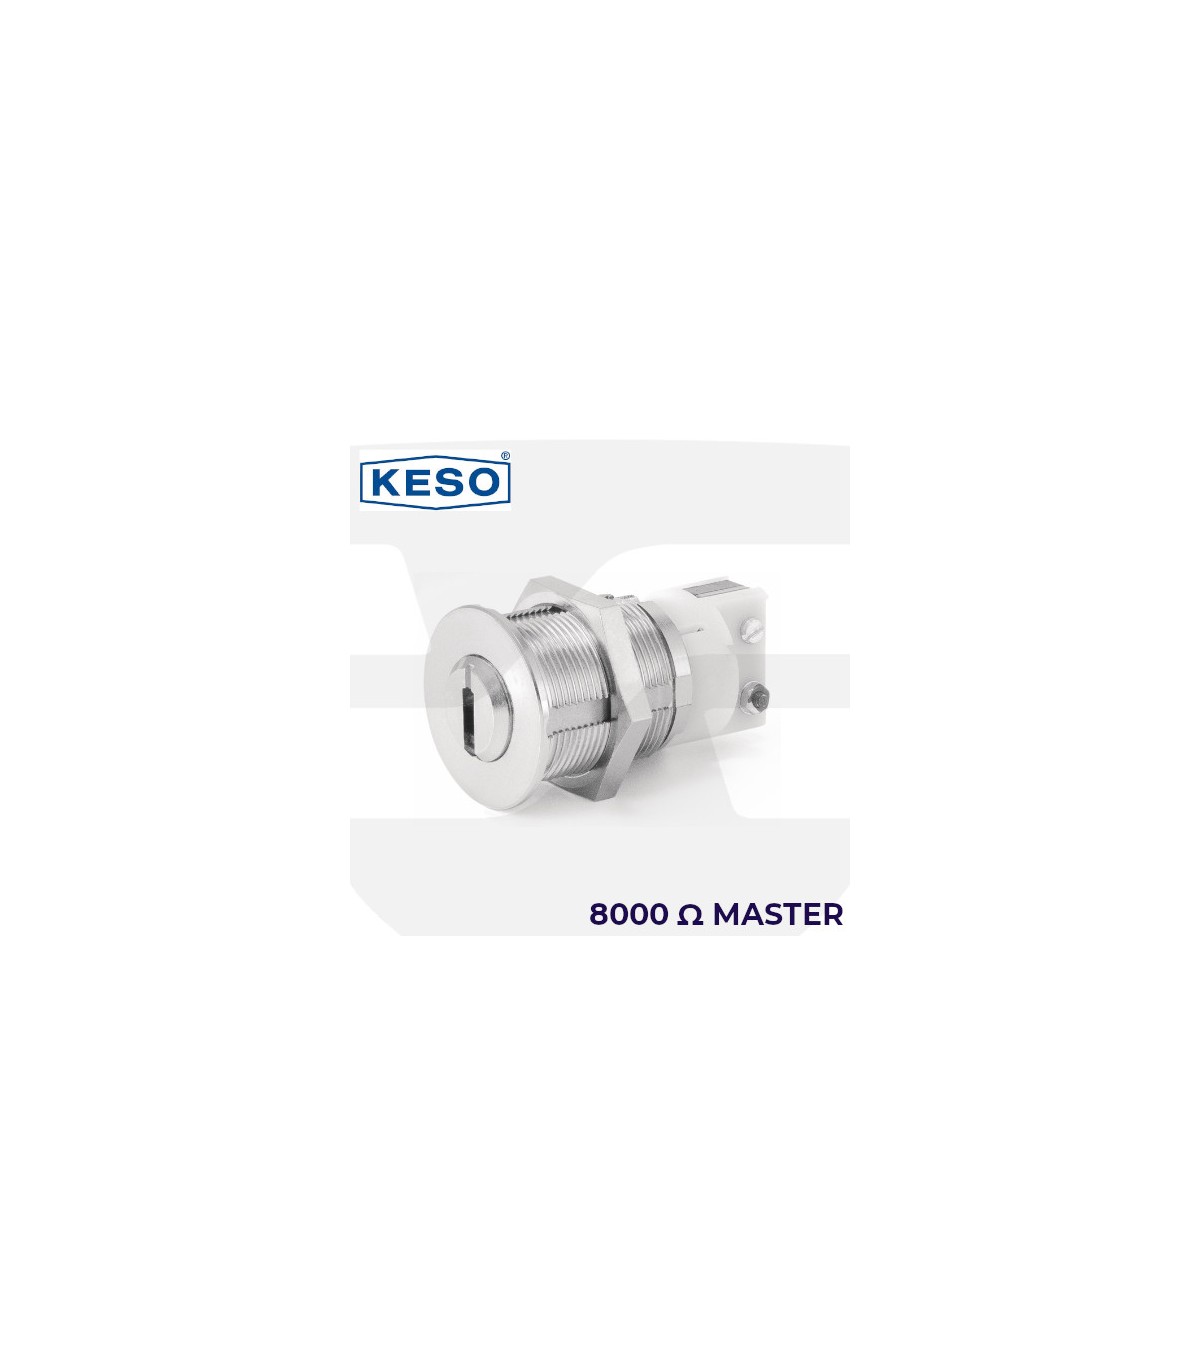 Cilindro Switch KESO 8000 Ω2 MASTER, Cromo - Ferresegur keso llaves Cuello  extra largo, 14 mm. 1.CILINDRO NIQUELADO Diámetro 23.2 mm. Giro 360º